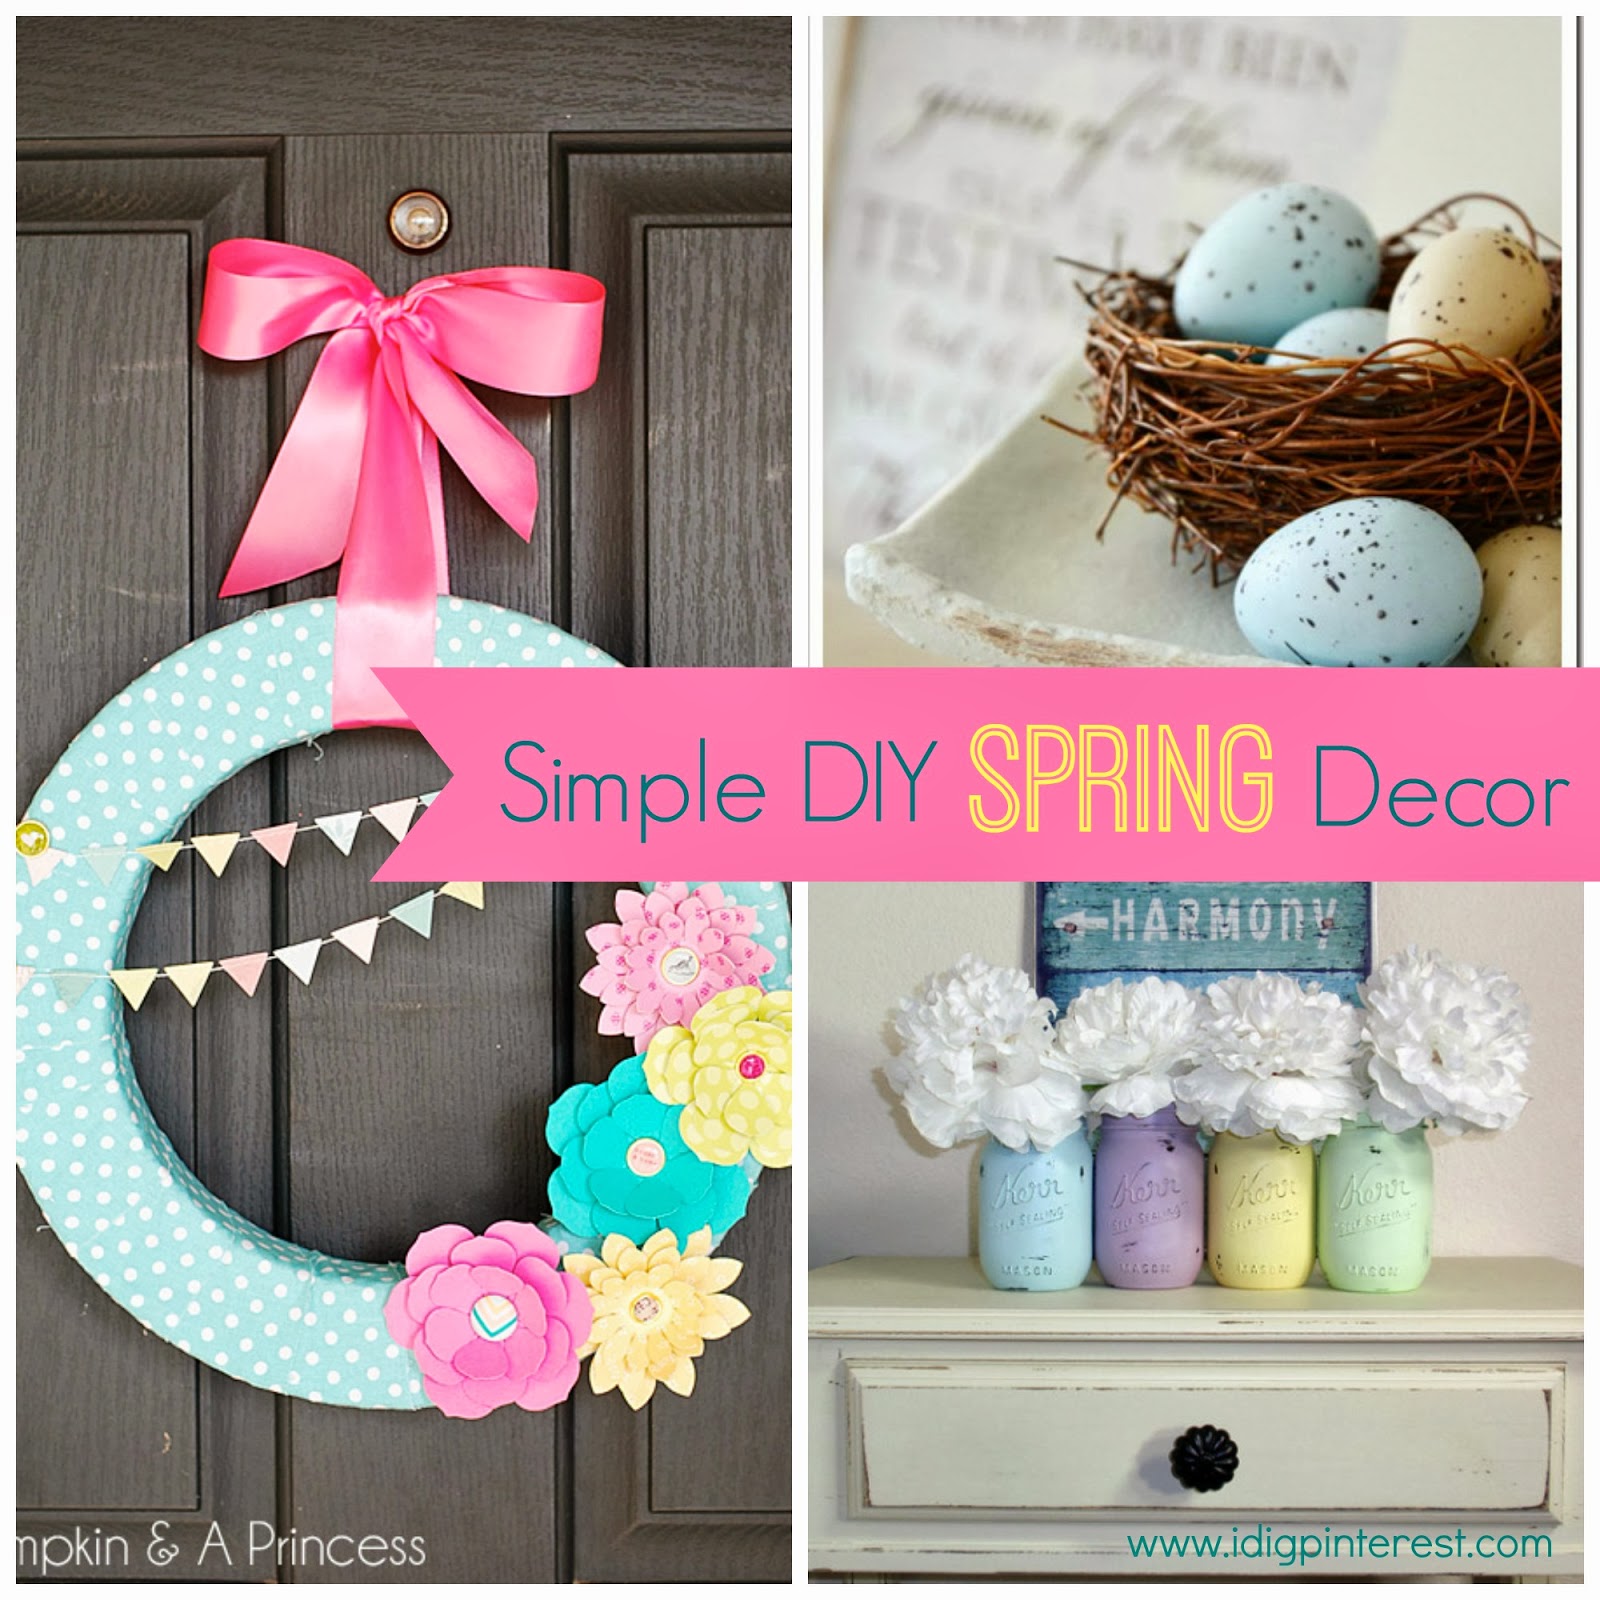 I Dig Pinterest  Simple DIY  Spring Decor  Ideas 